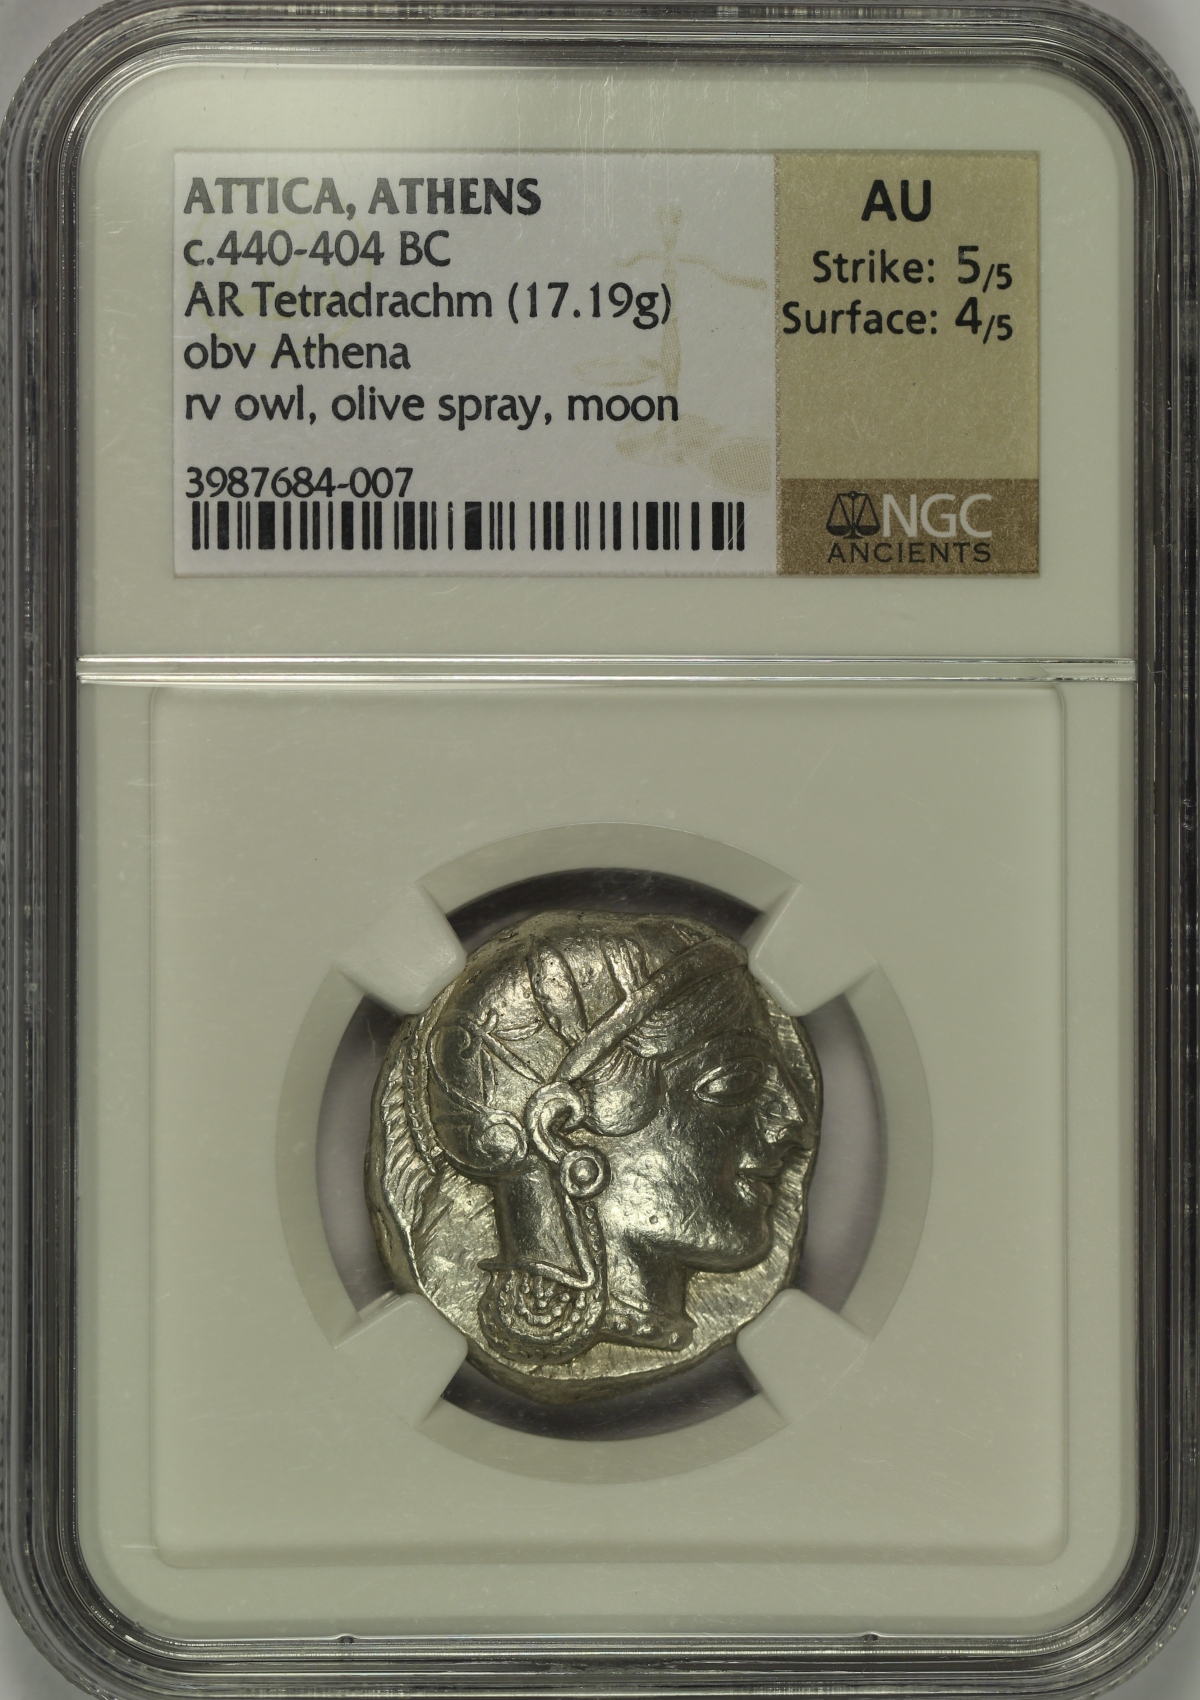 Michael Kittle Rare Coins - 440-404 BC Athens Attica Tetradrachm